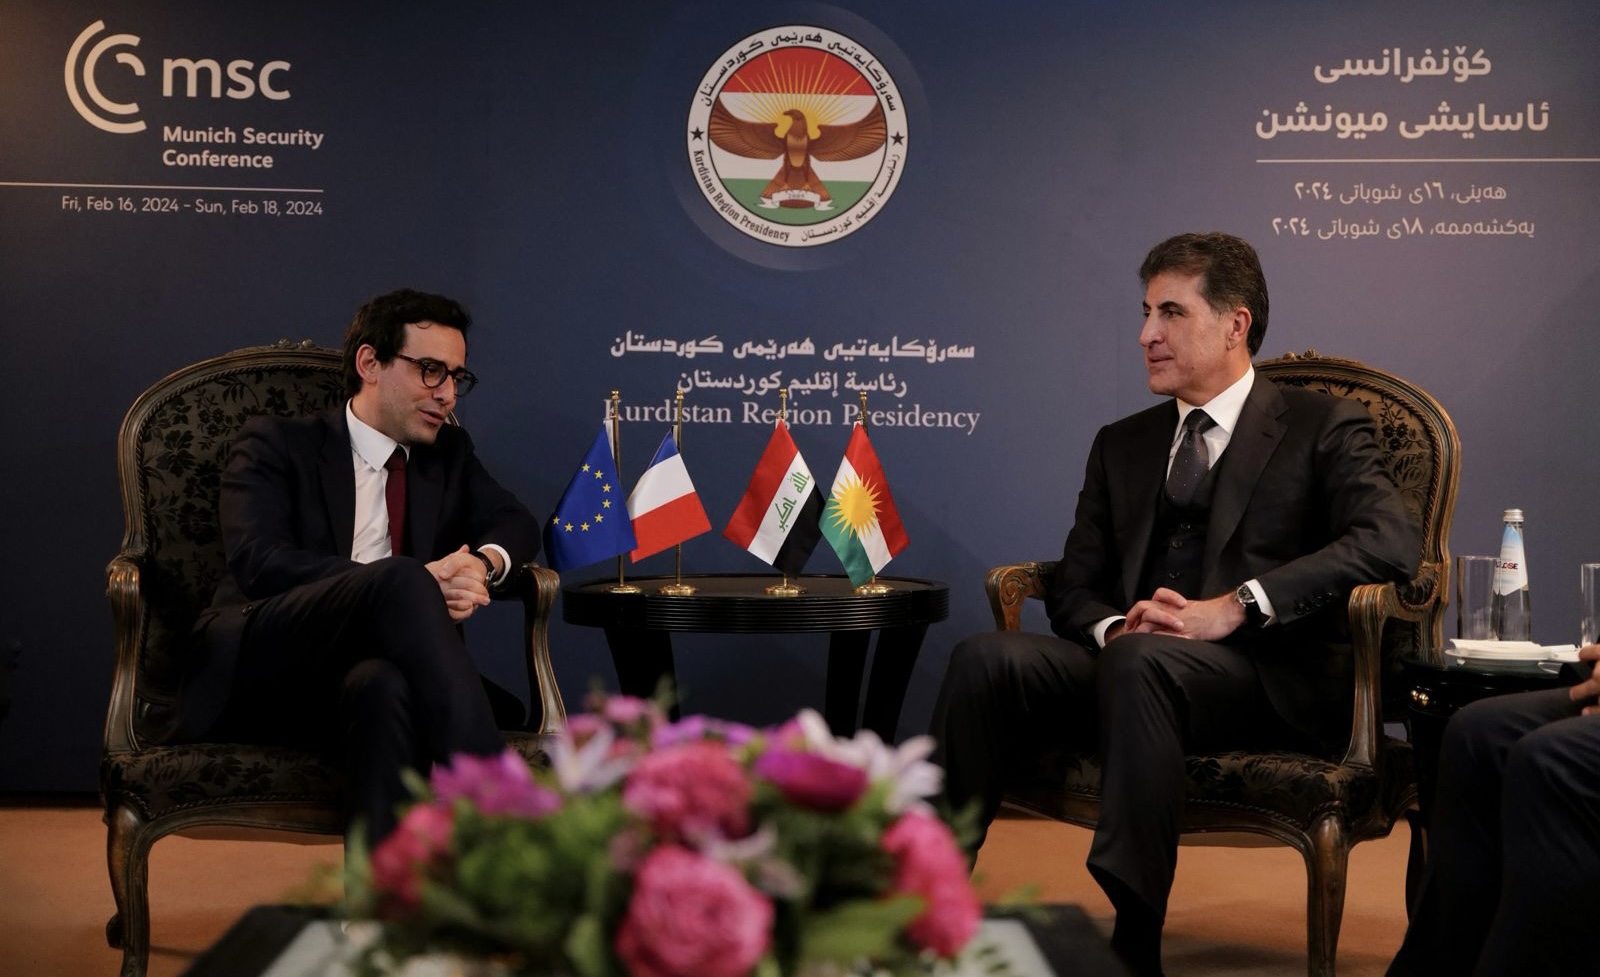 President Barzani appreciates the "Friendship" between Paris and Erbil